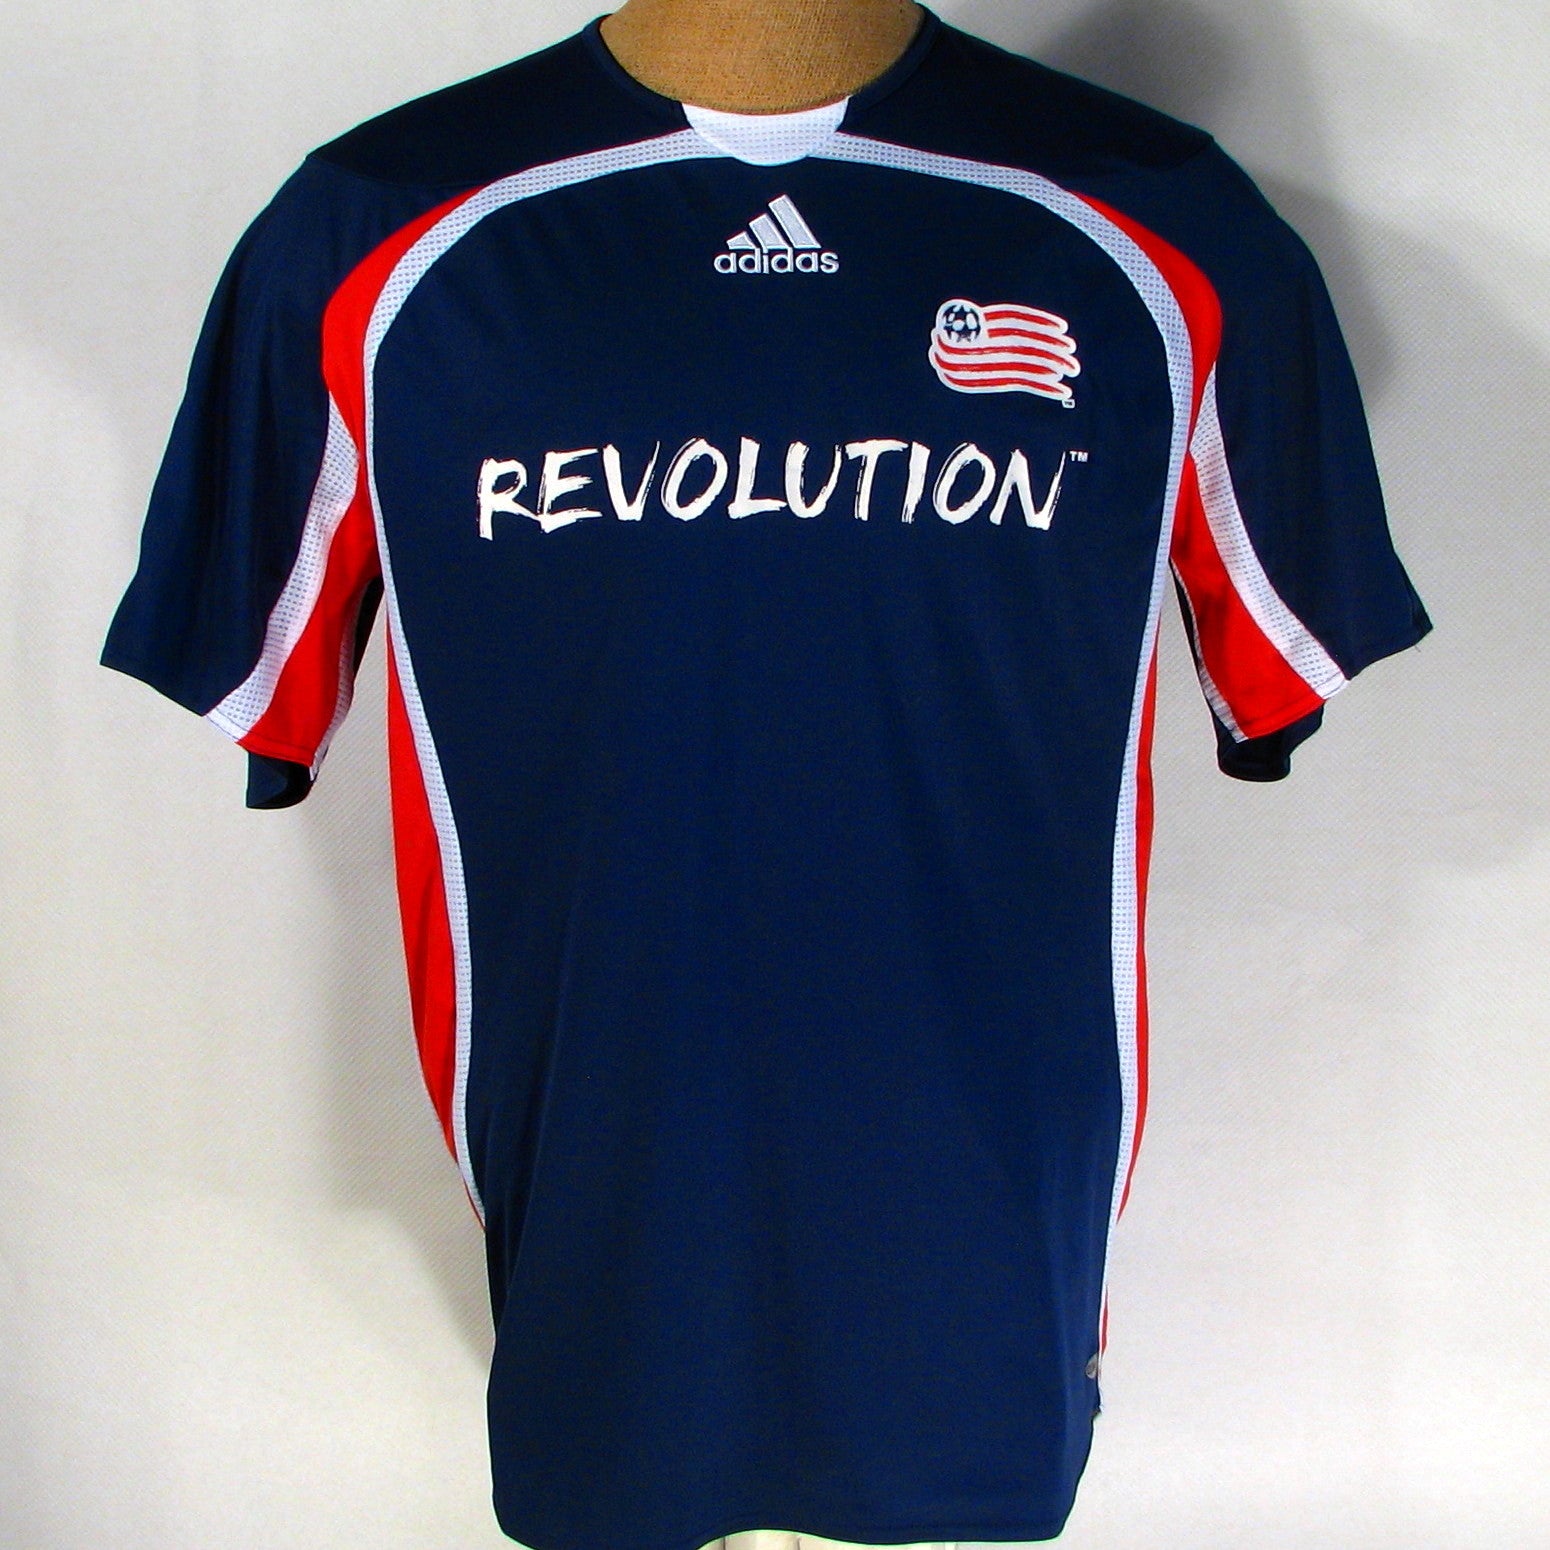 new england revolution jersey